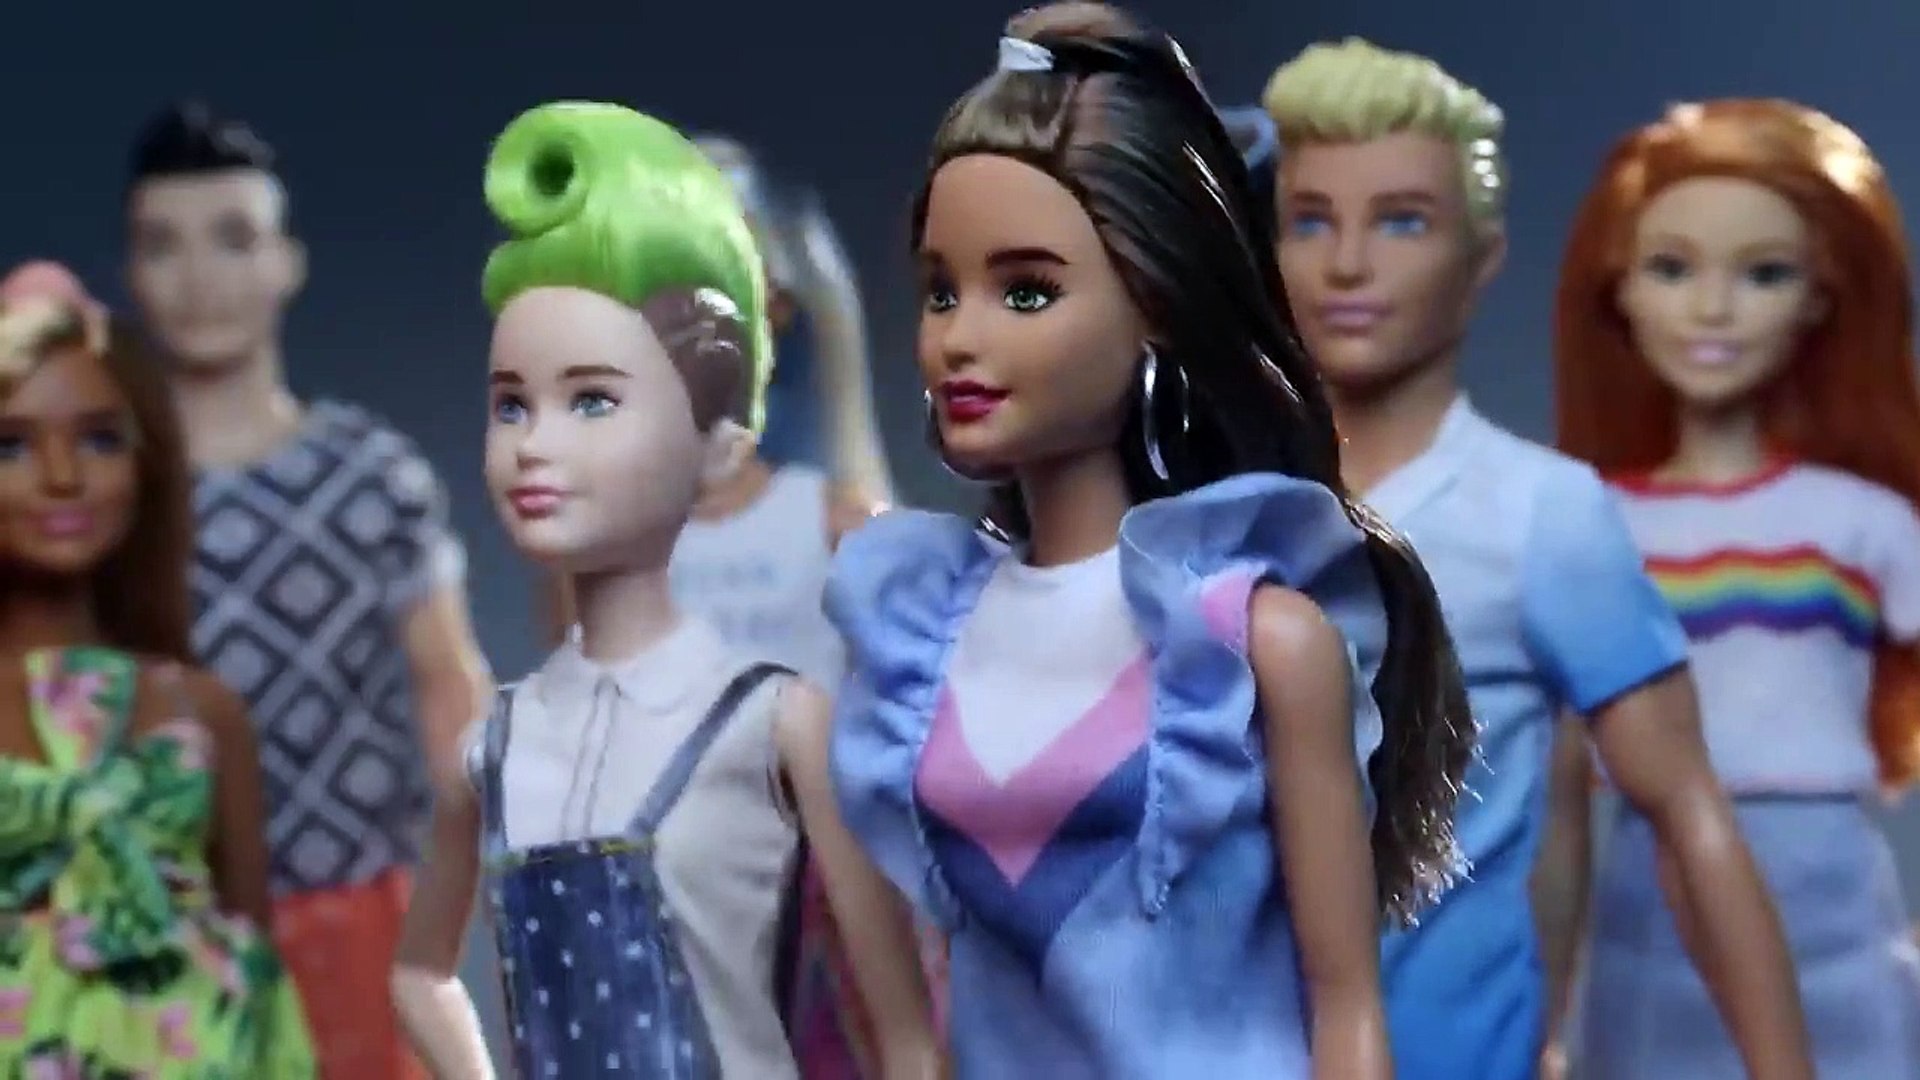 Barbie  Barbie Color Reveal Fashion Show! 